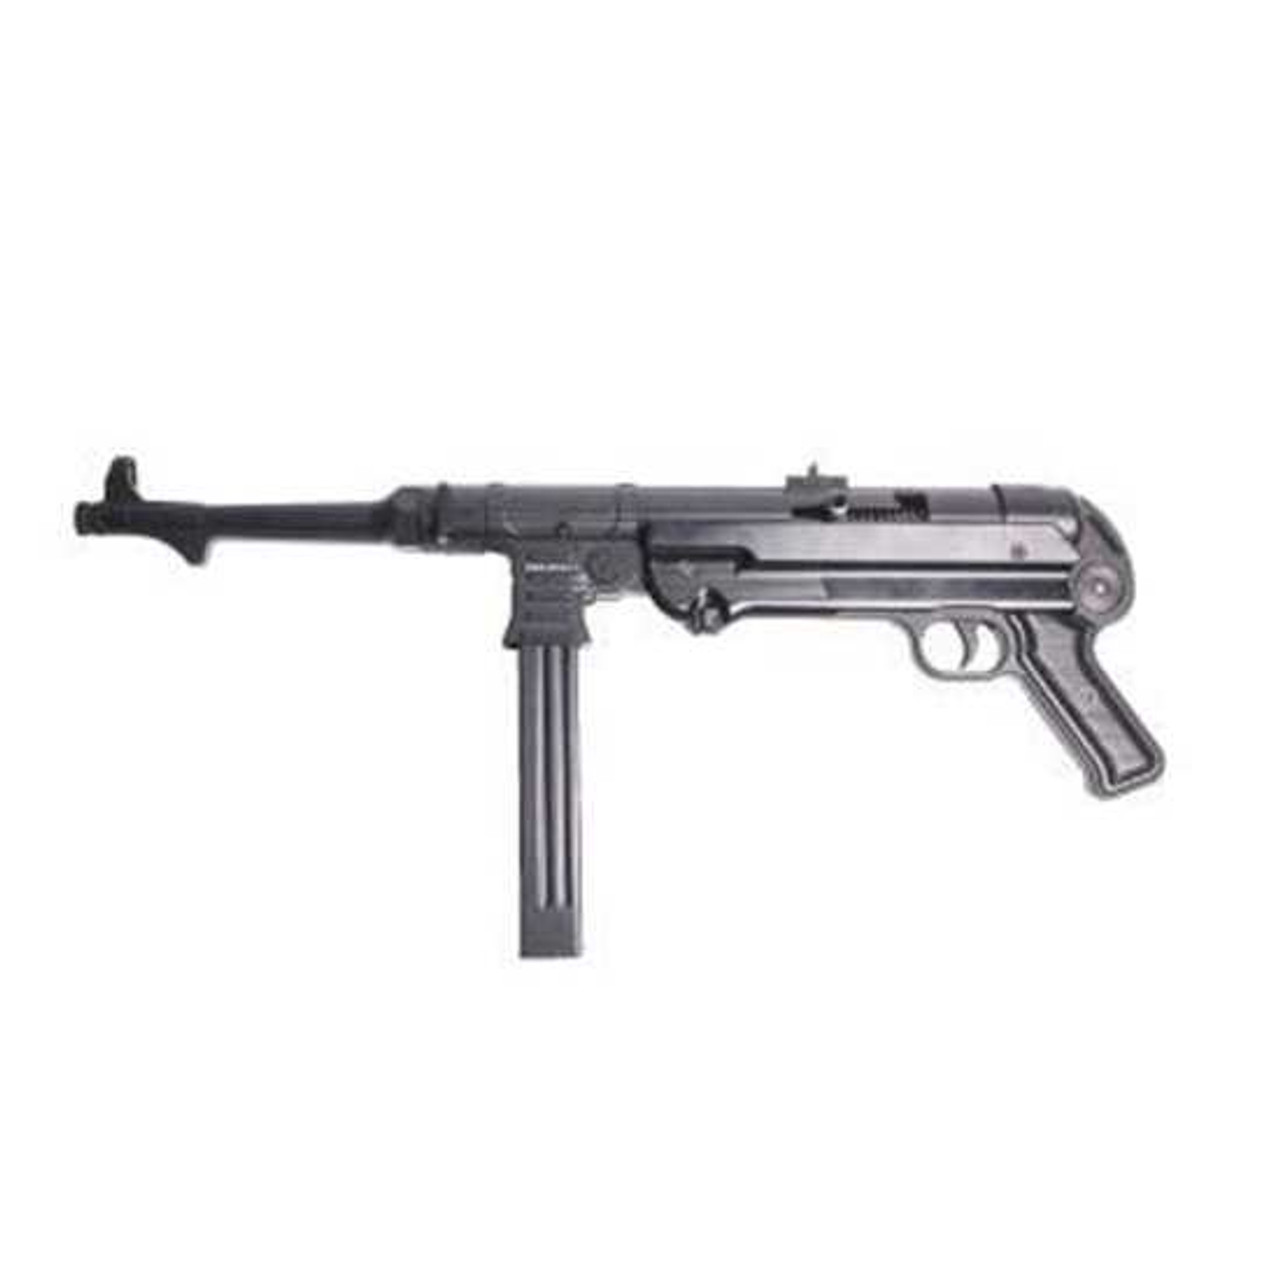 ATI GSG MP40-P 9MM 10.8 PISTOL NO WOOD CRATE